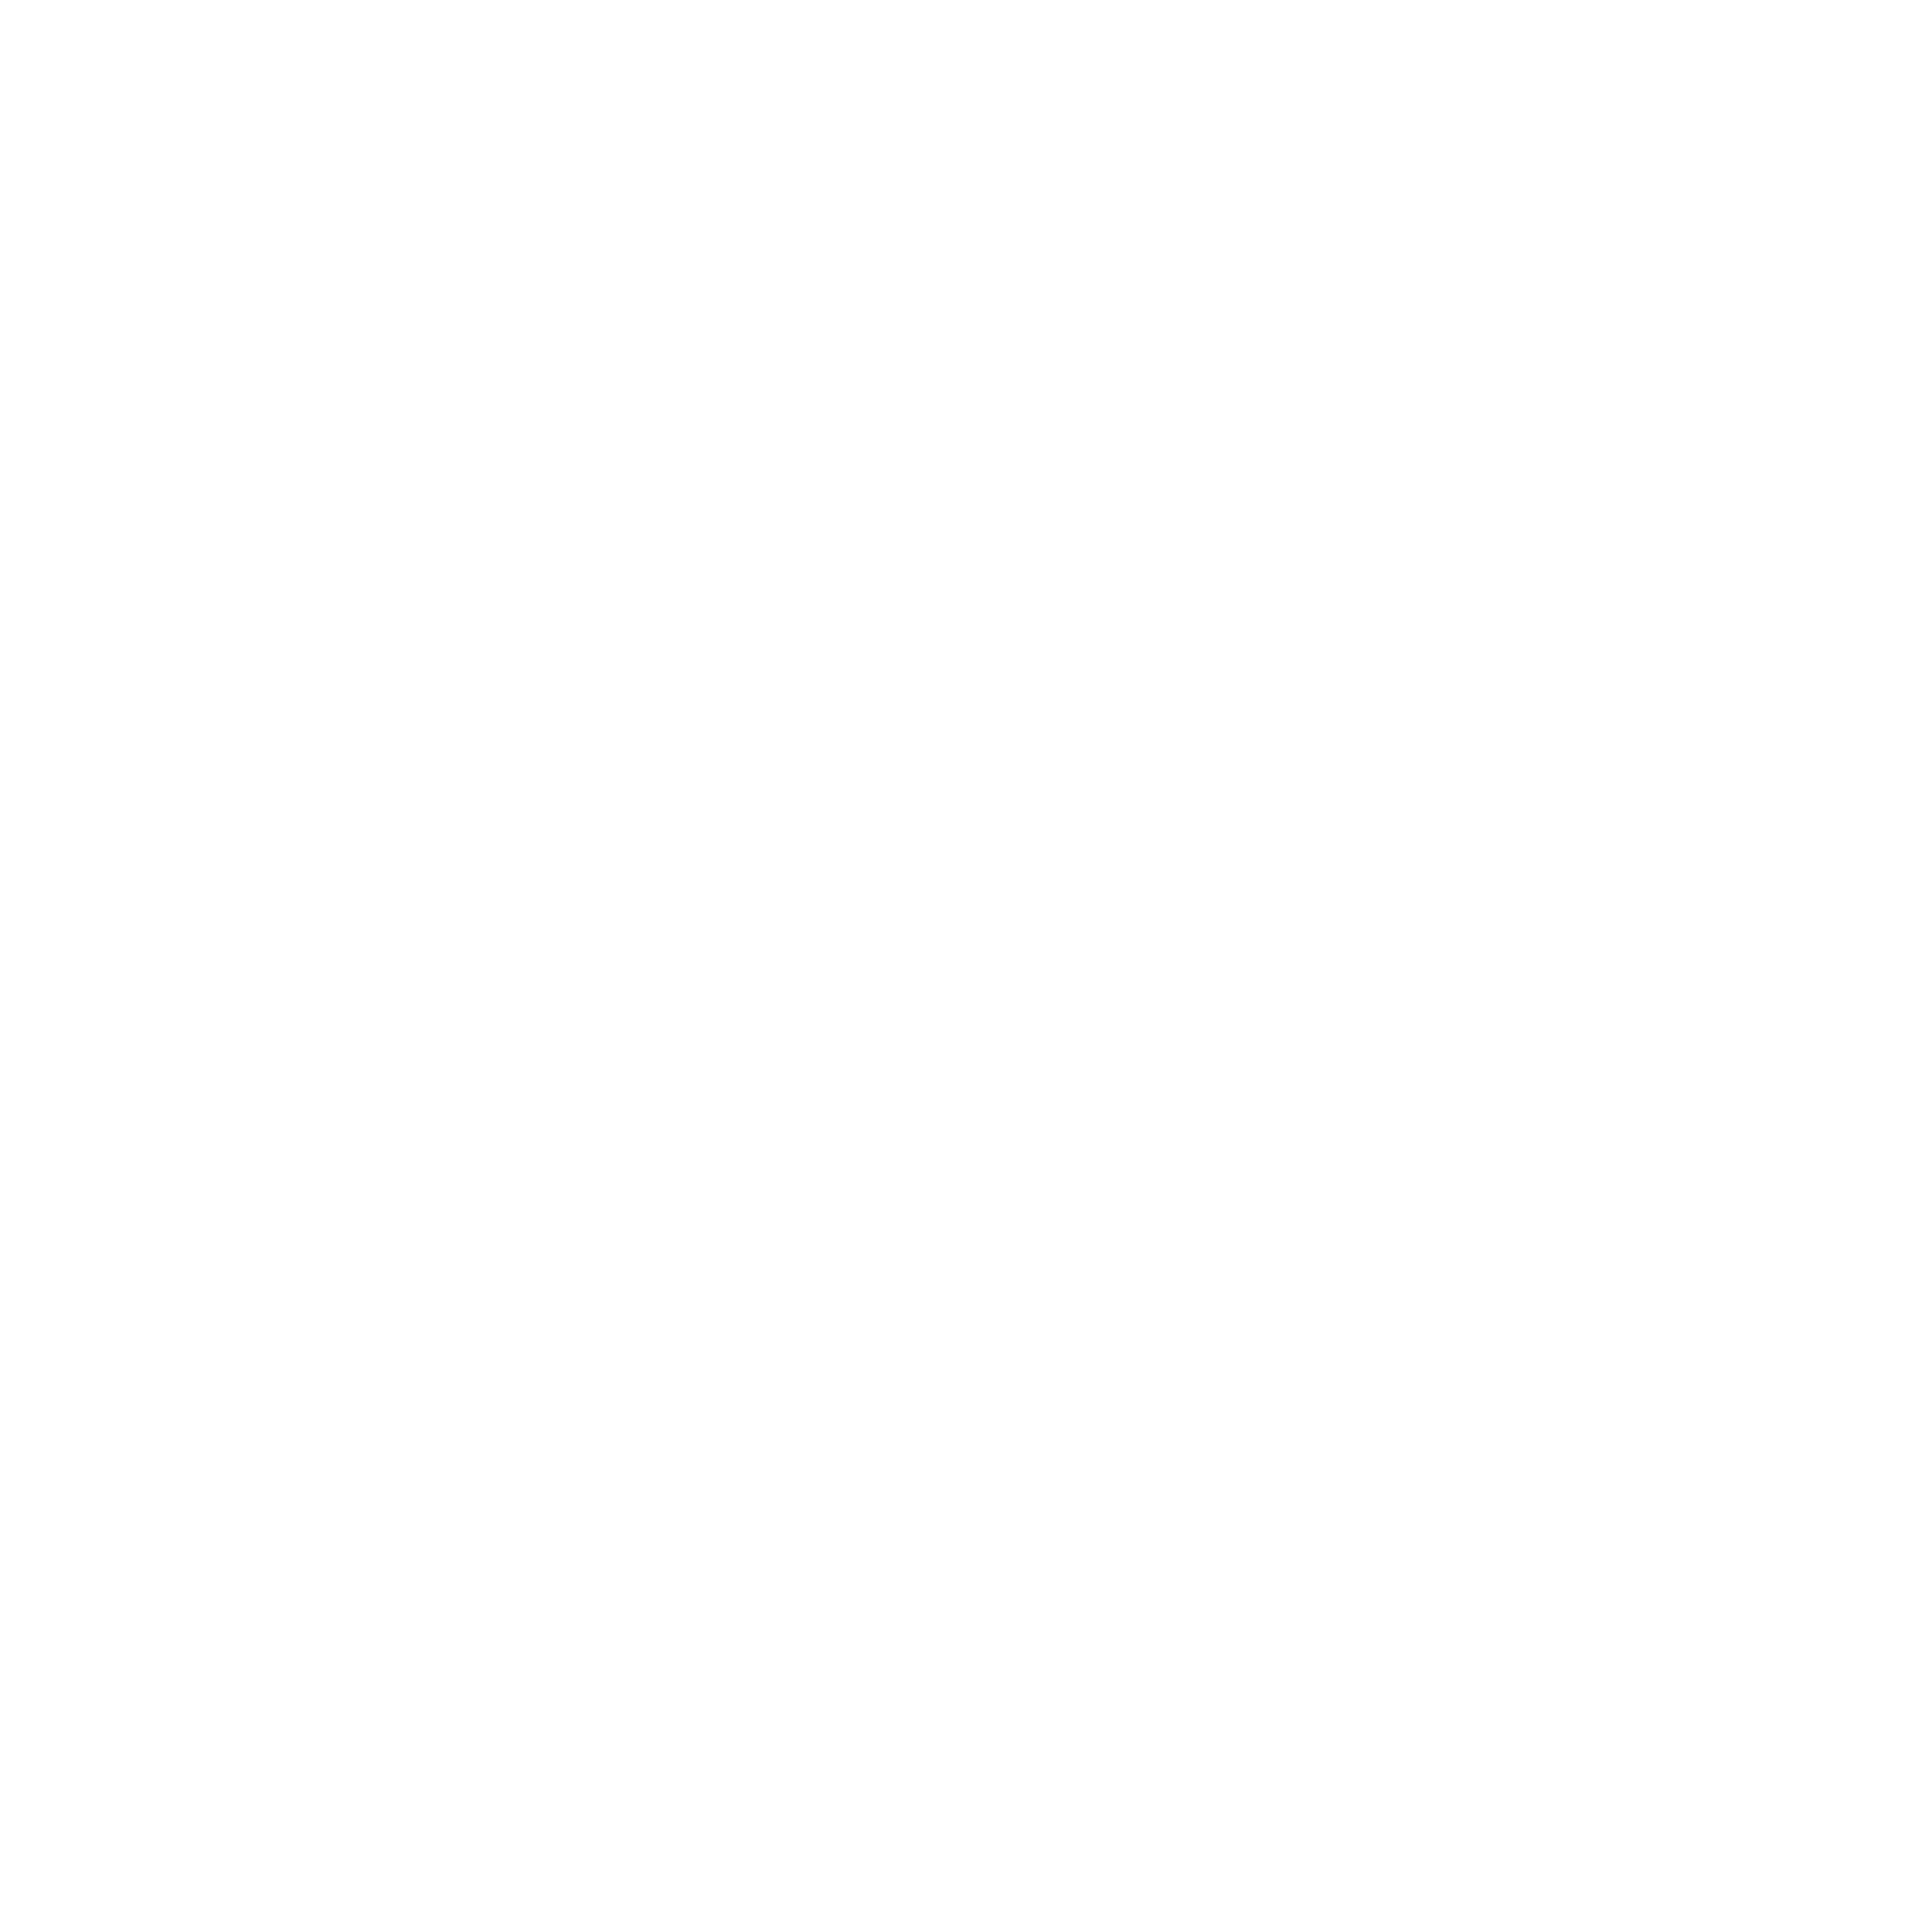 Lancaster hcm